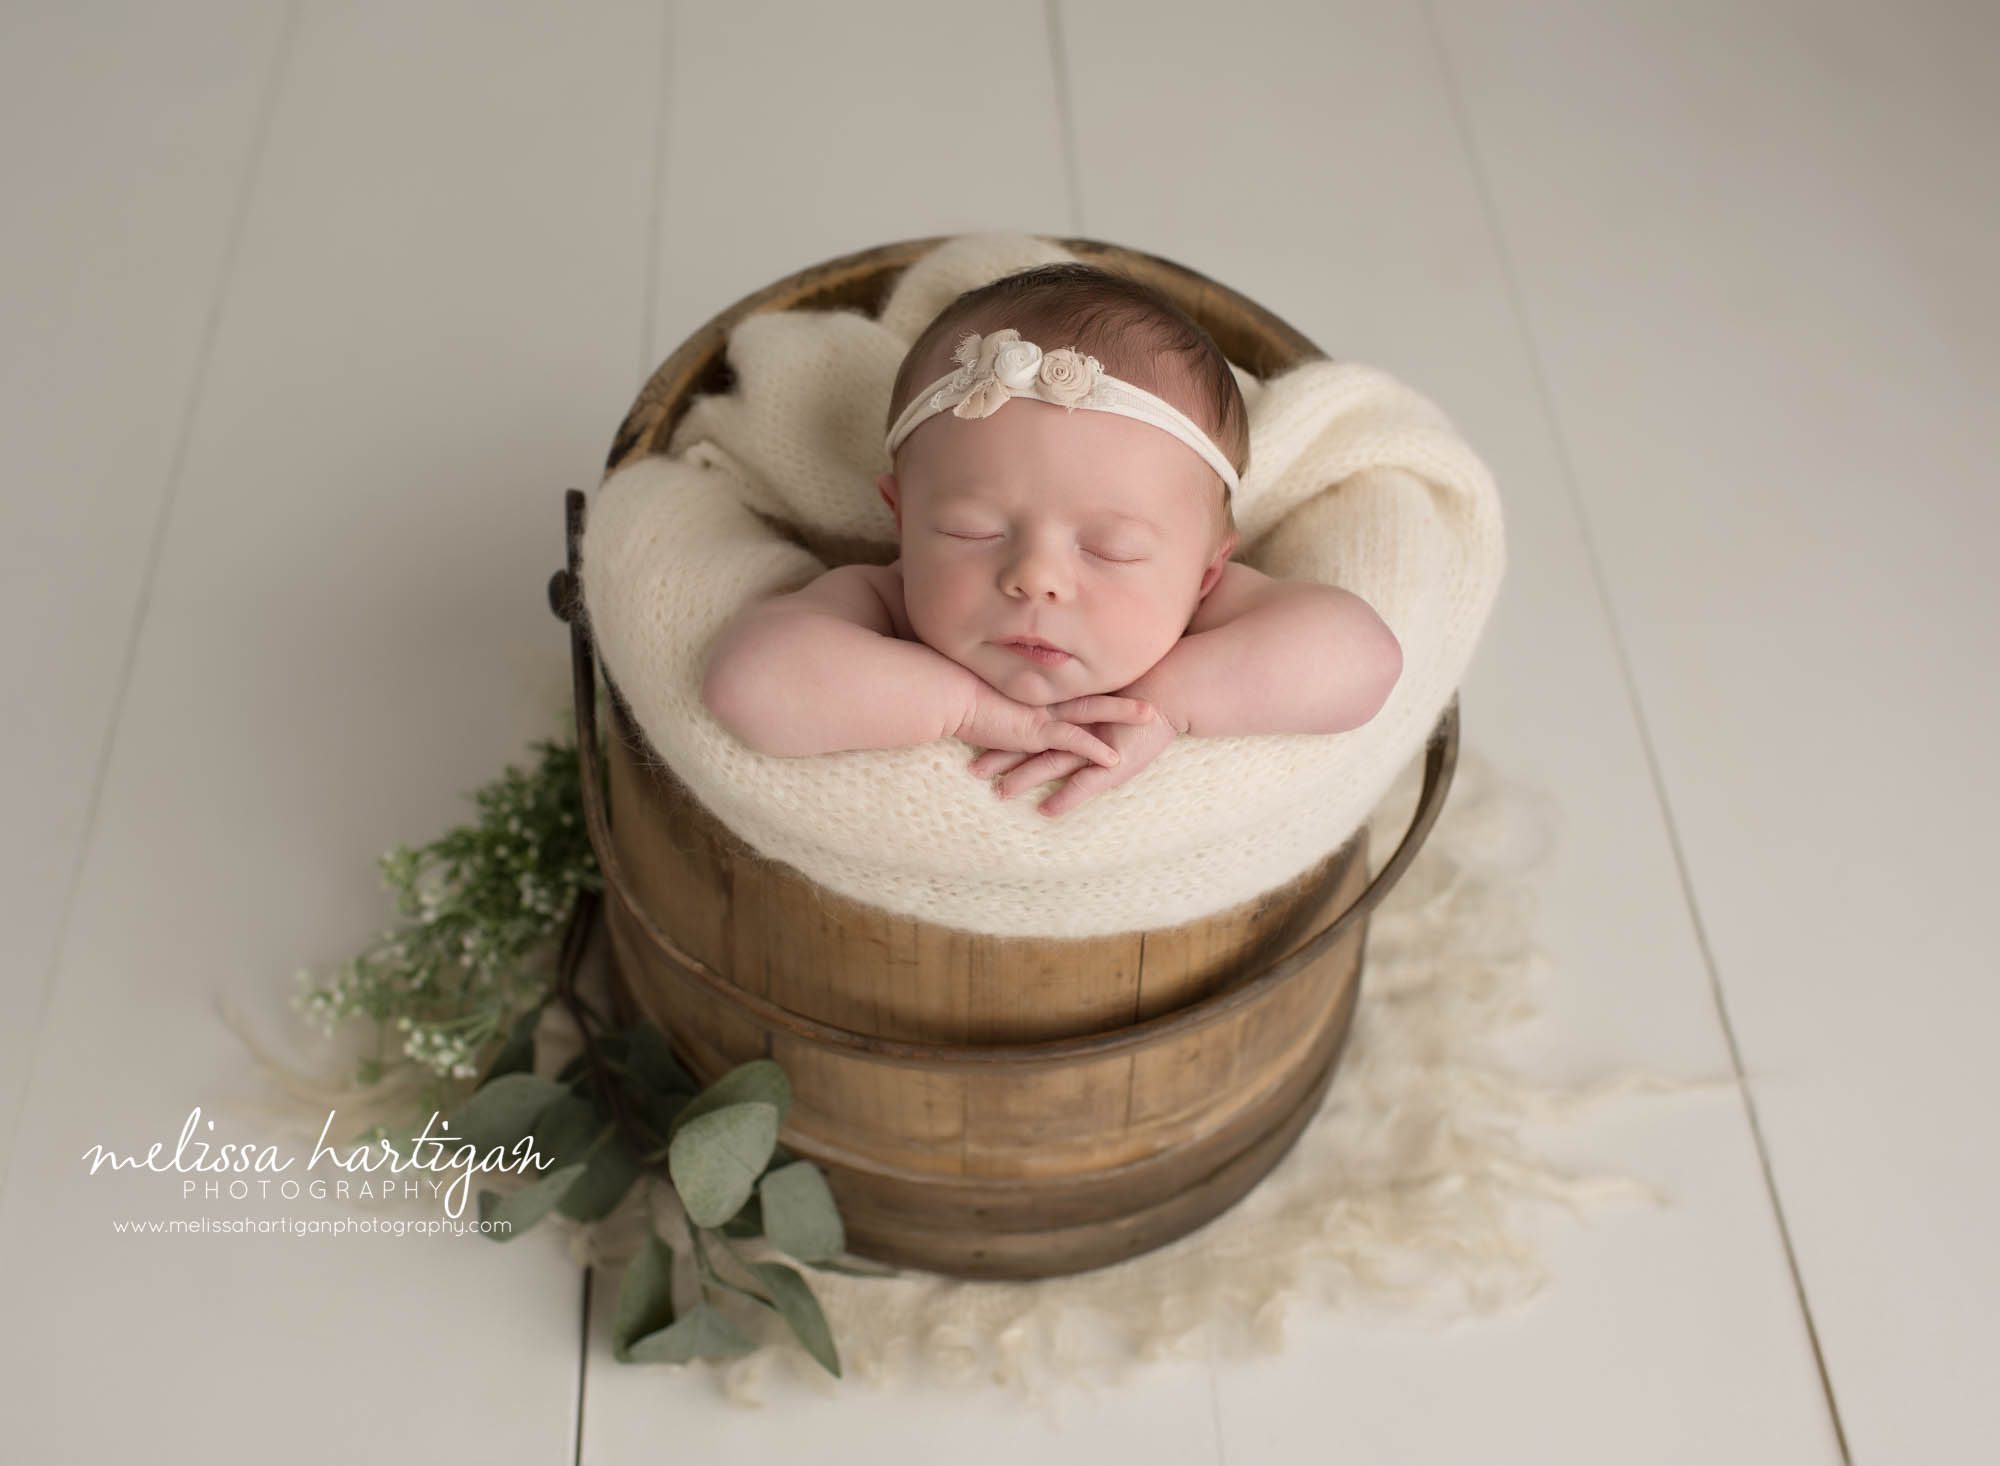 newborn baby girl posed in cream wrap in wooden bucket Newbonr london county CT newborn Photography